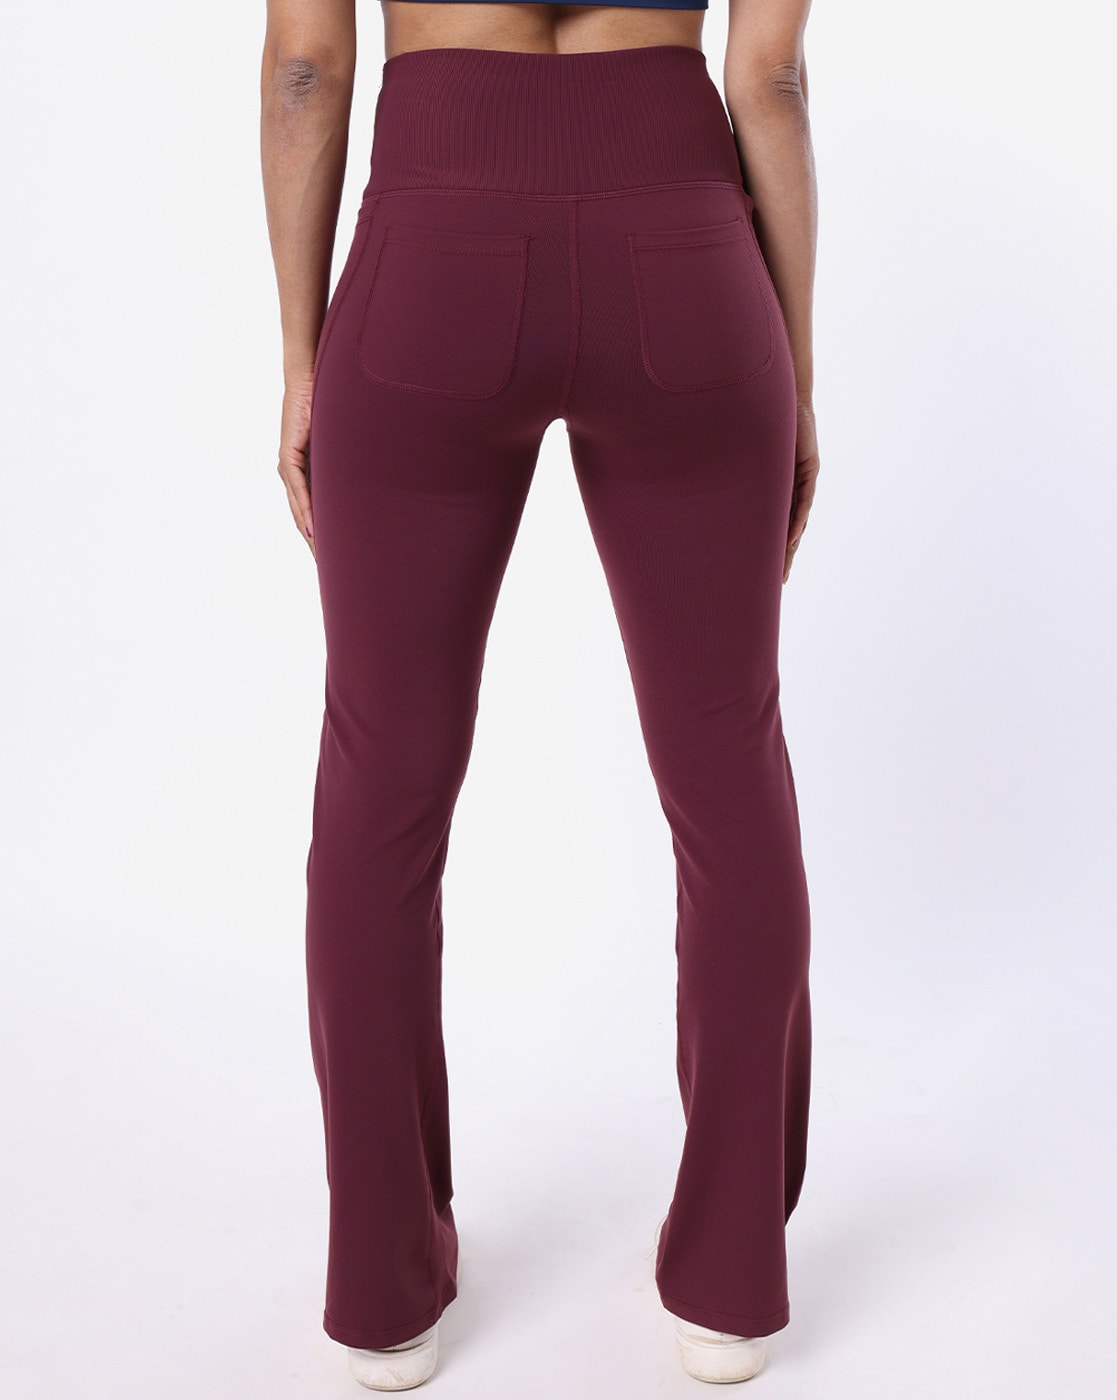 Buy Burgundy Track Pants for Women by BLISSCLUB Online